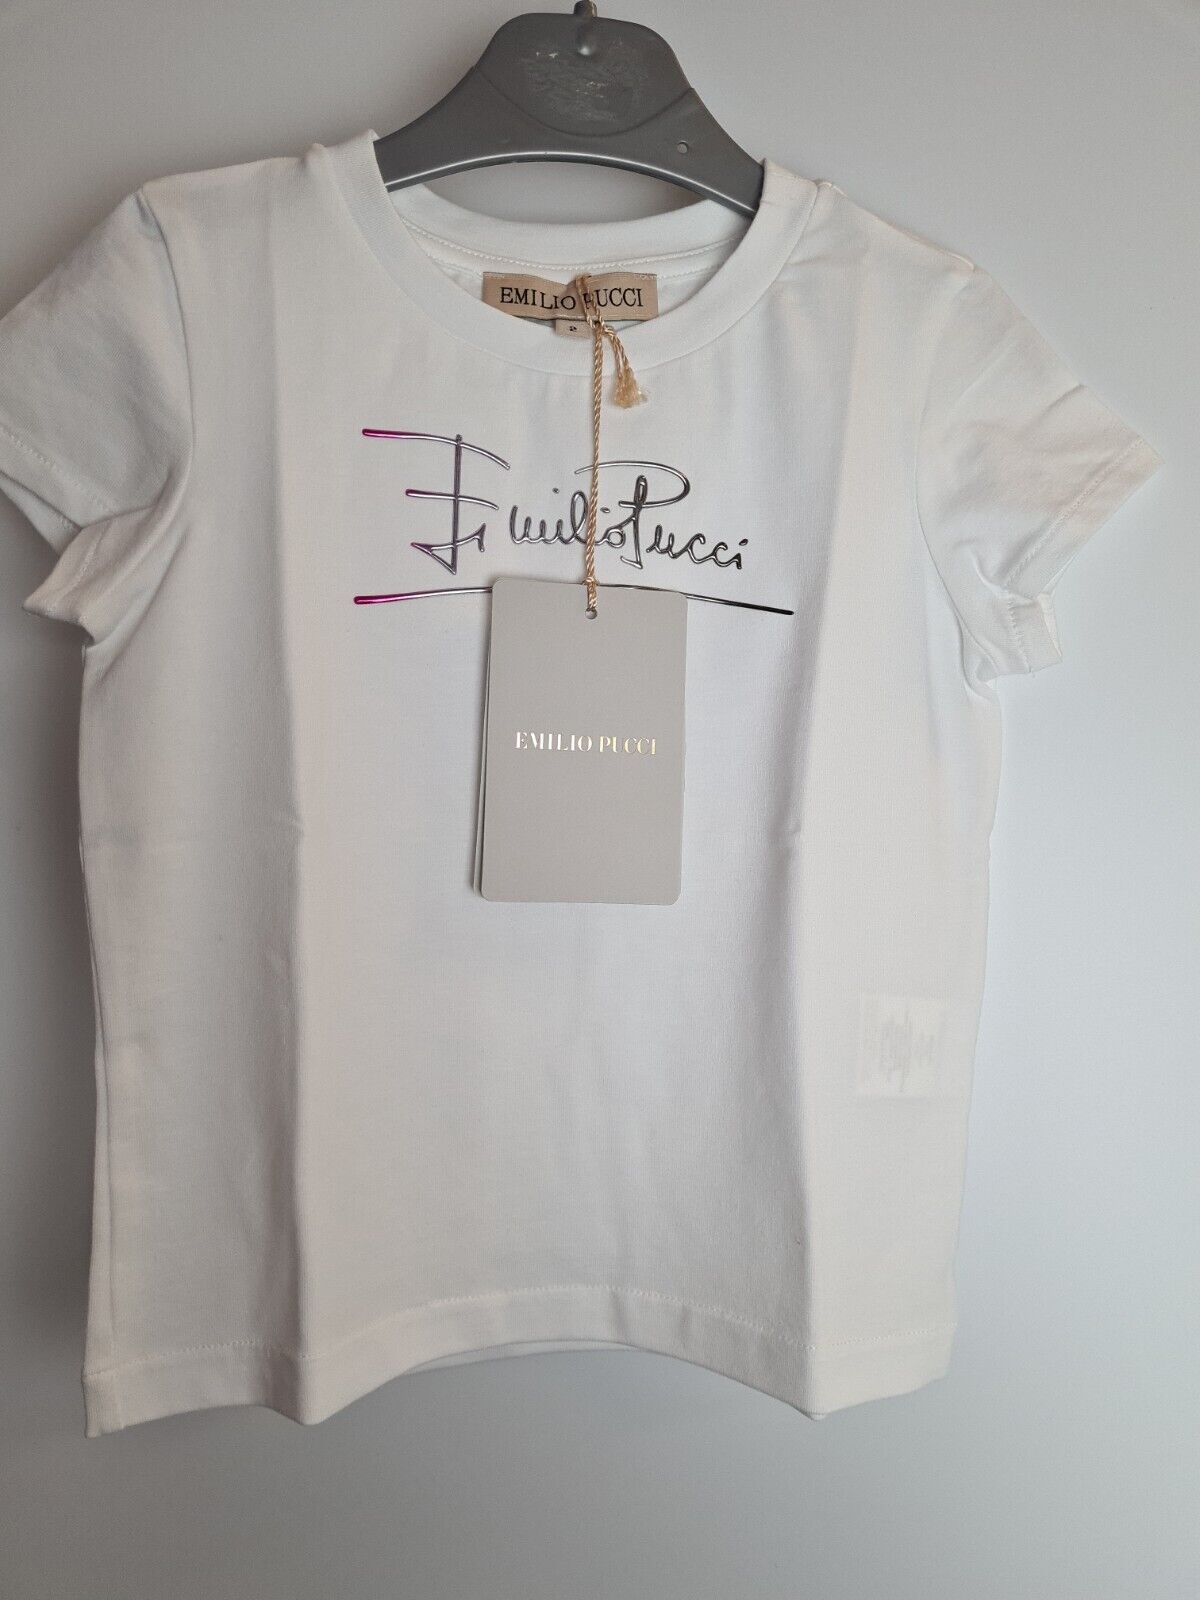 Emilio Pucci Kids White Metallic Logo T-Shirt Size 4 Years **** V269